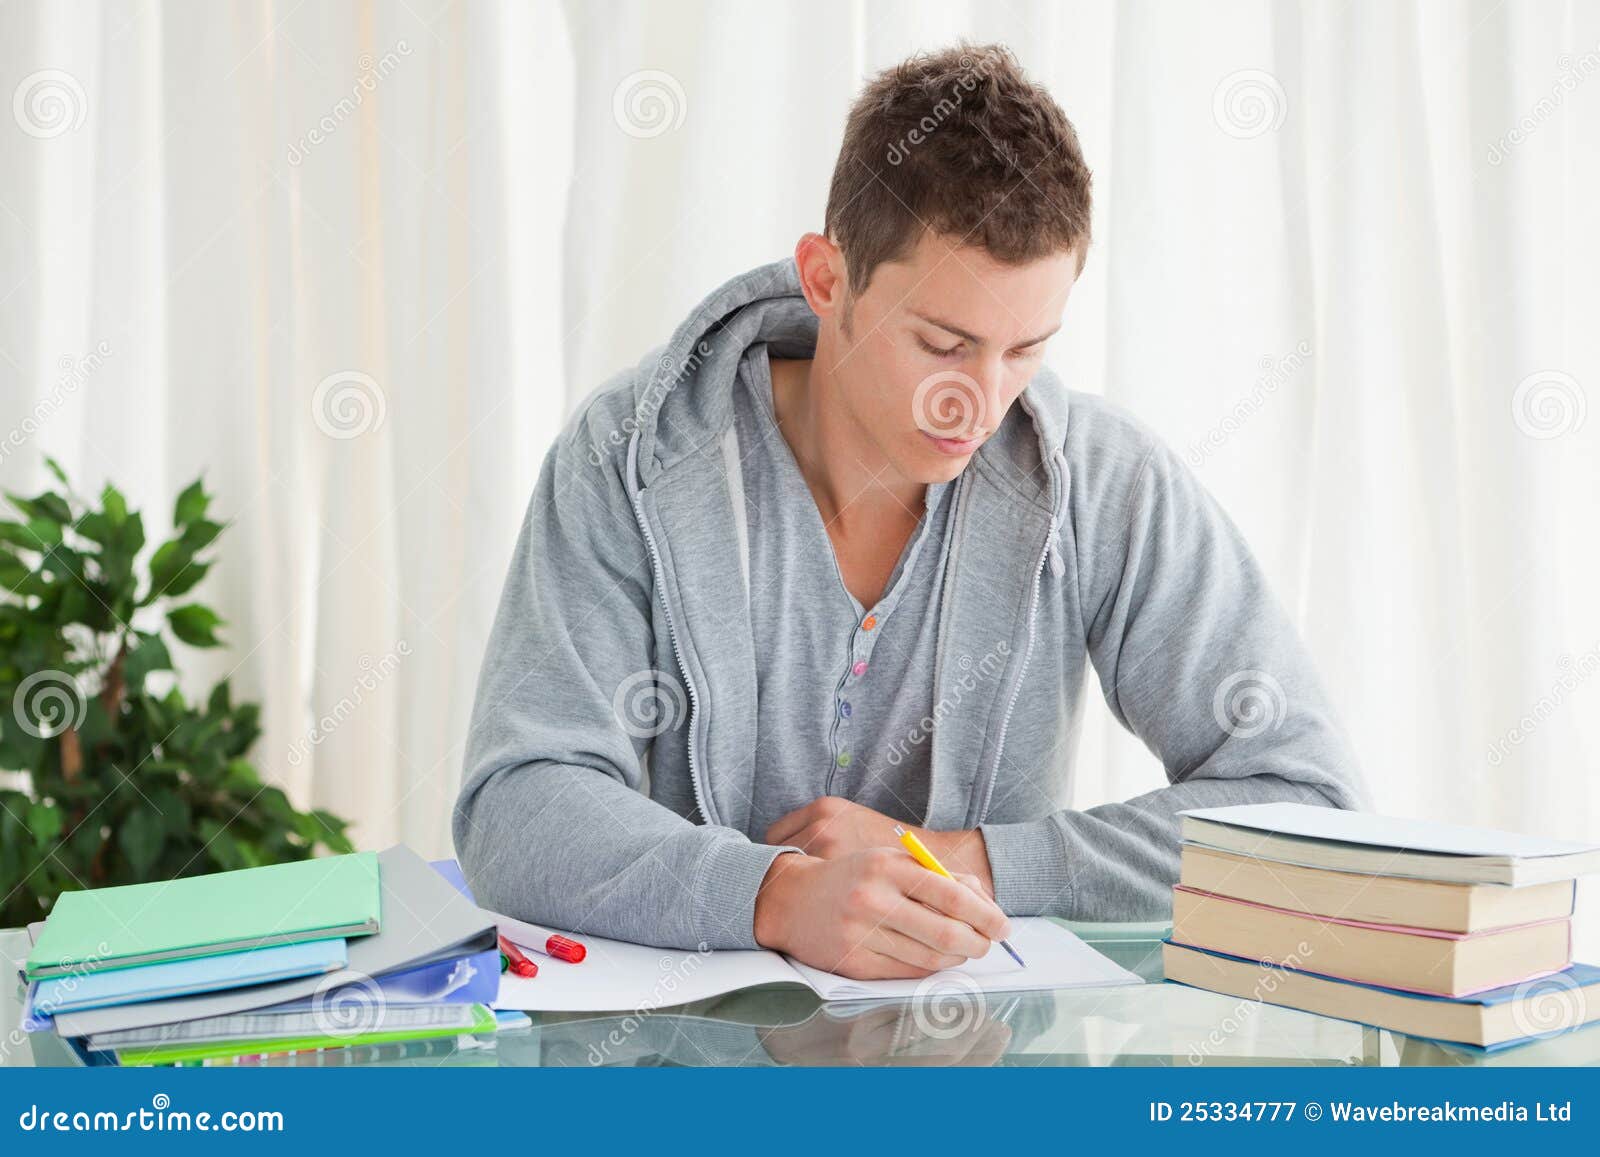 guy working on homework